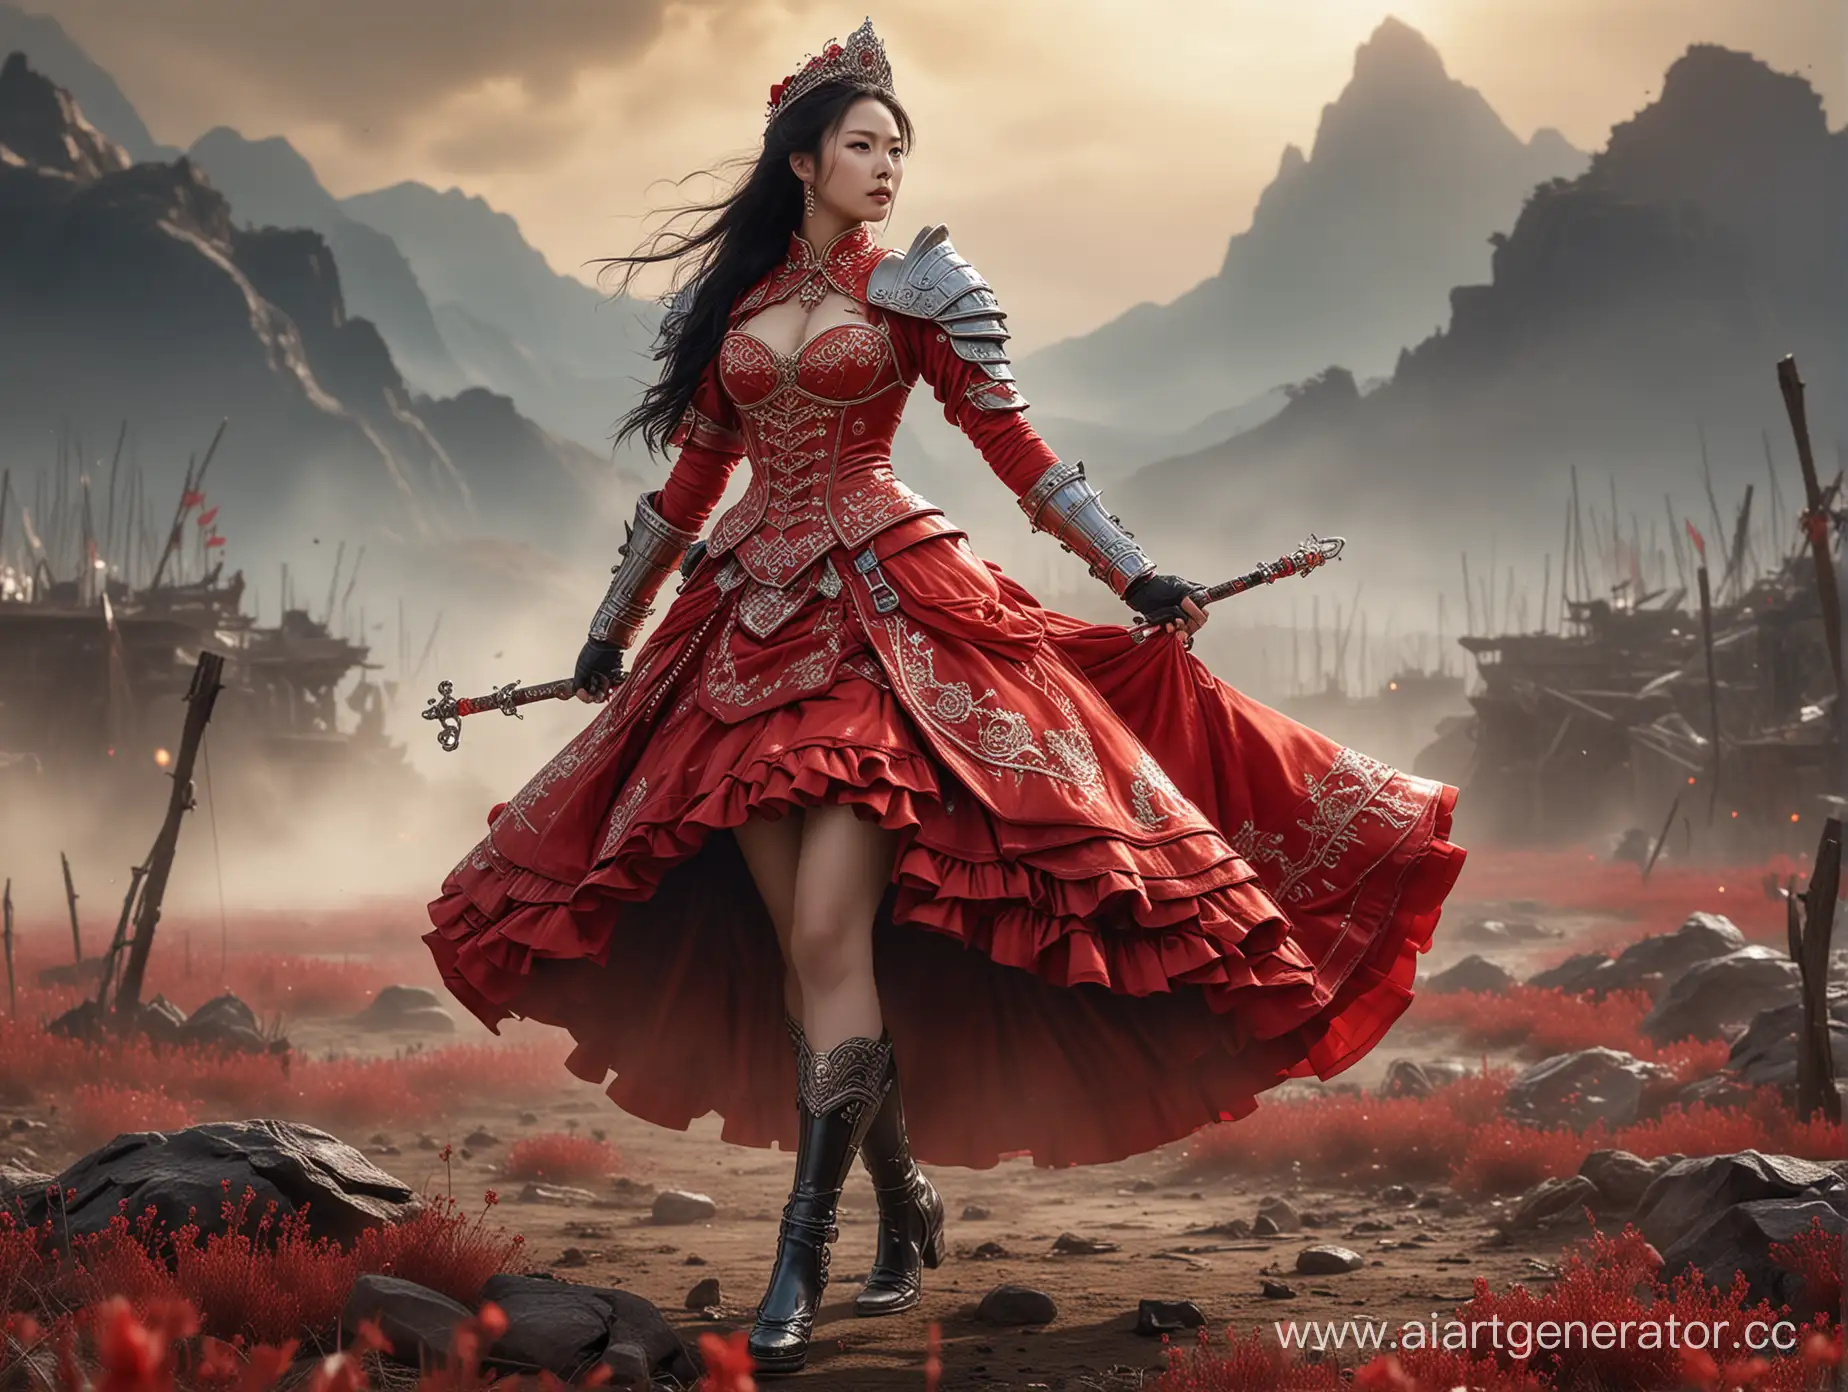 Warhammer-Fantasy-Battle-Woman-Miao-Ying-in-Red-Titan-Armor-on-Blazing-Battlefield